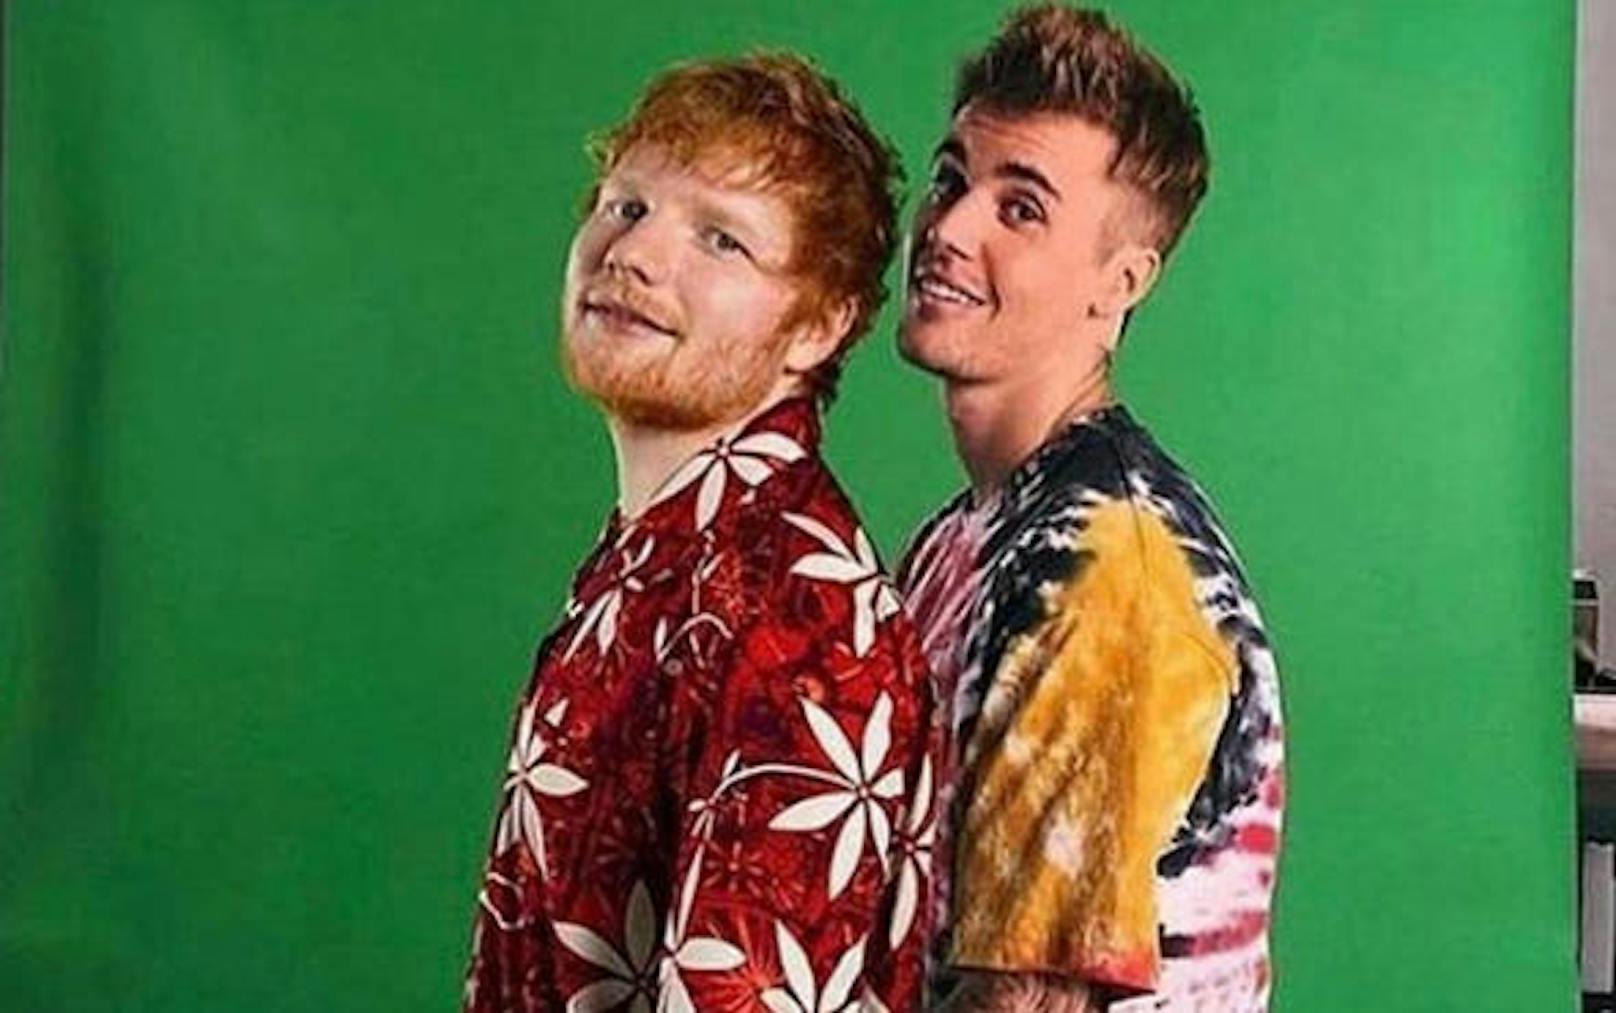 4. "I Don't Care (with Justin Bieber)" - Ed Sheeran & Justin Bieber